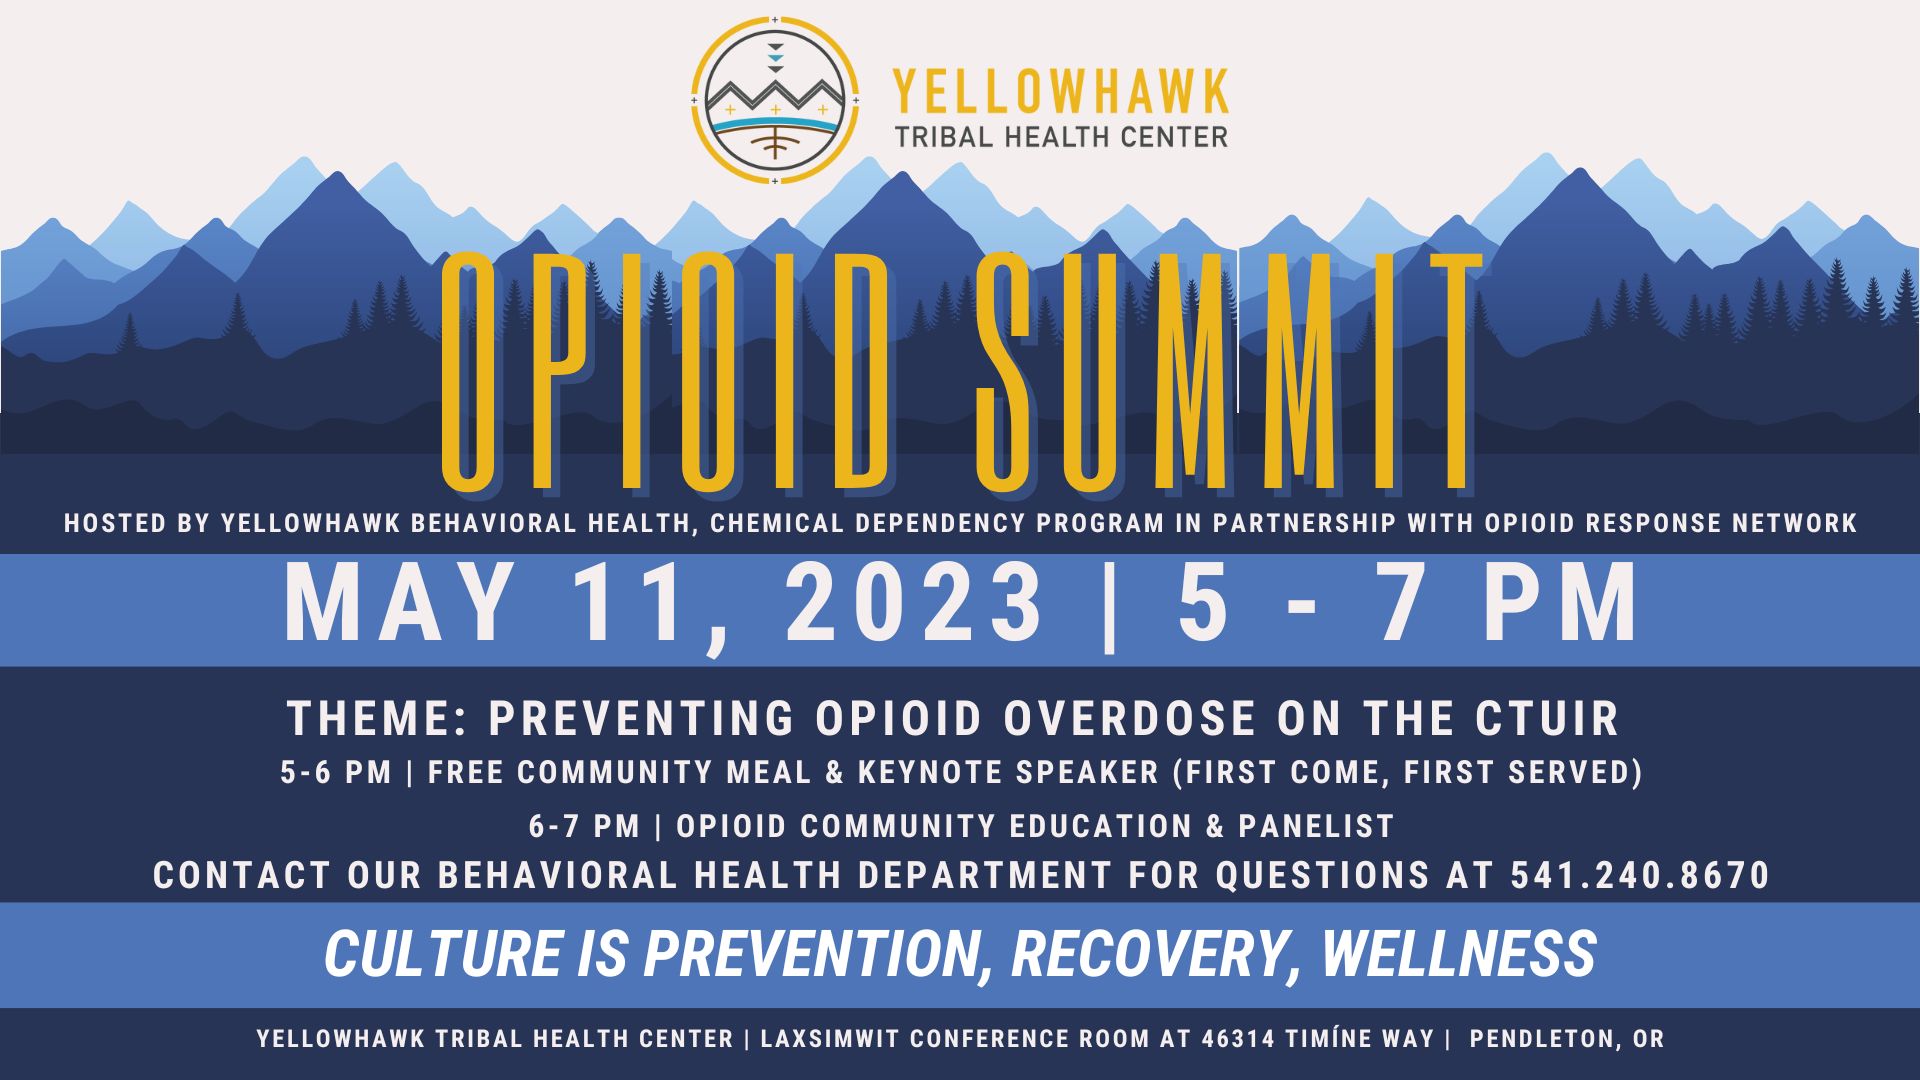 Opioid Summit Yellowhawk Tribal Health Center